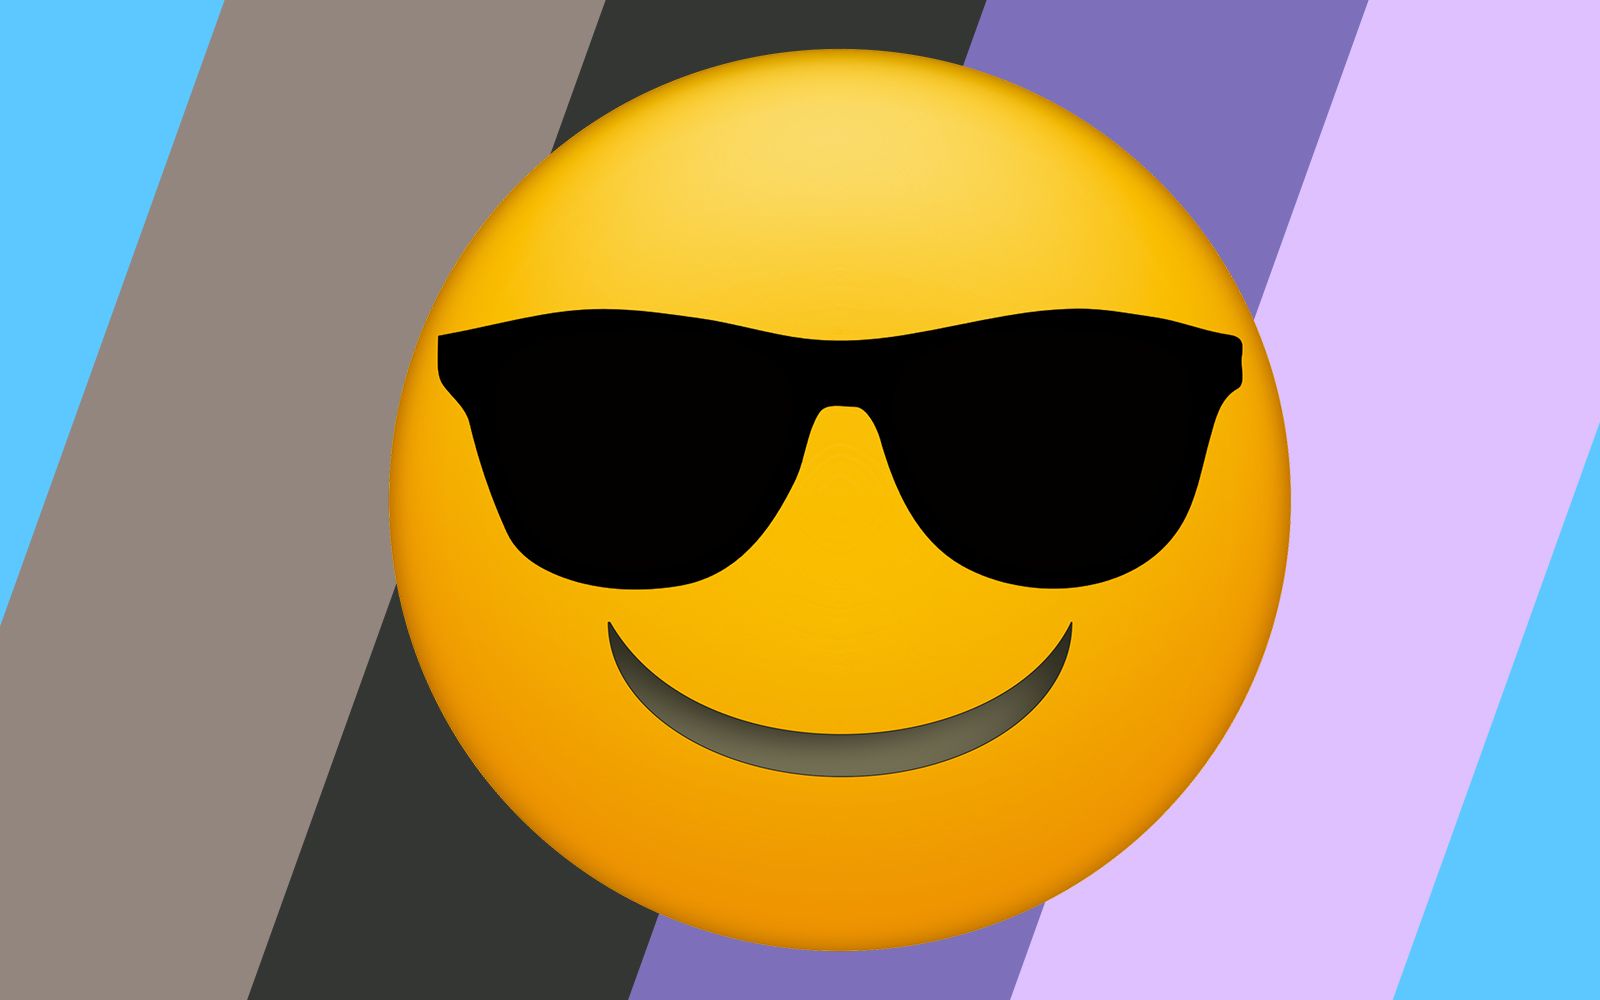 An emoji with sunglasses on a striped background - Emoji